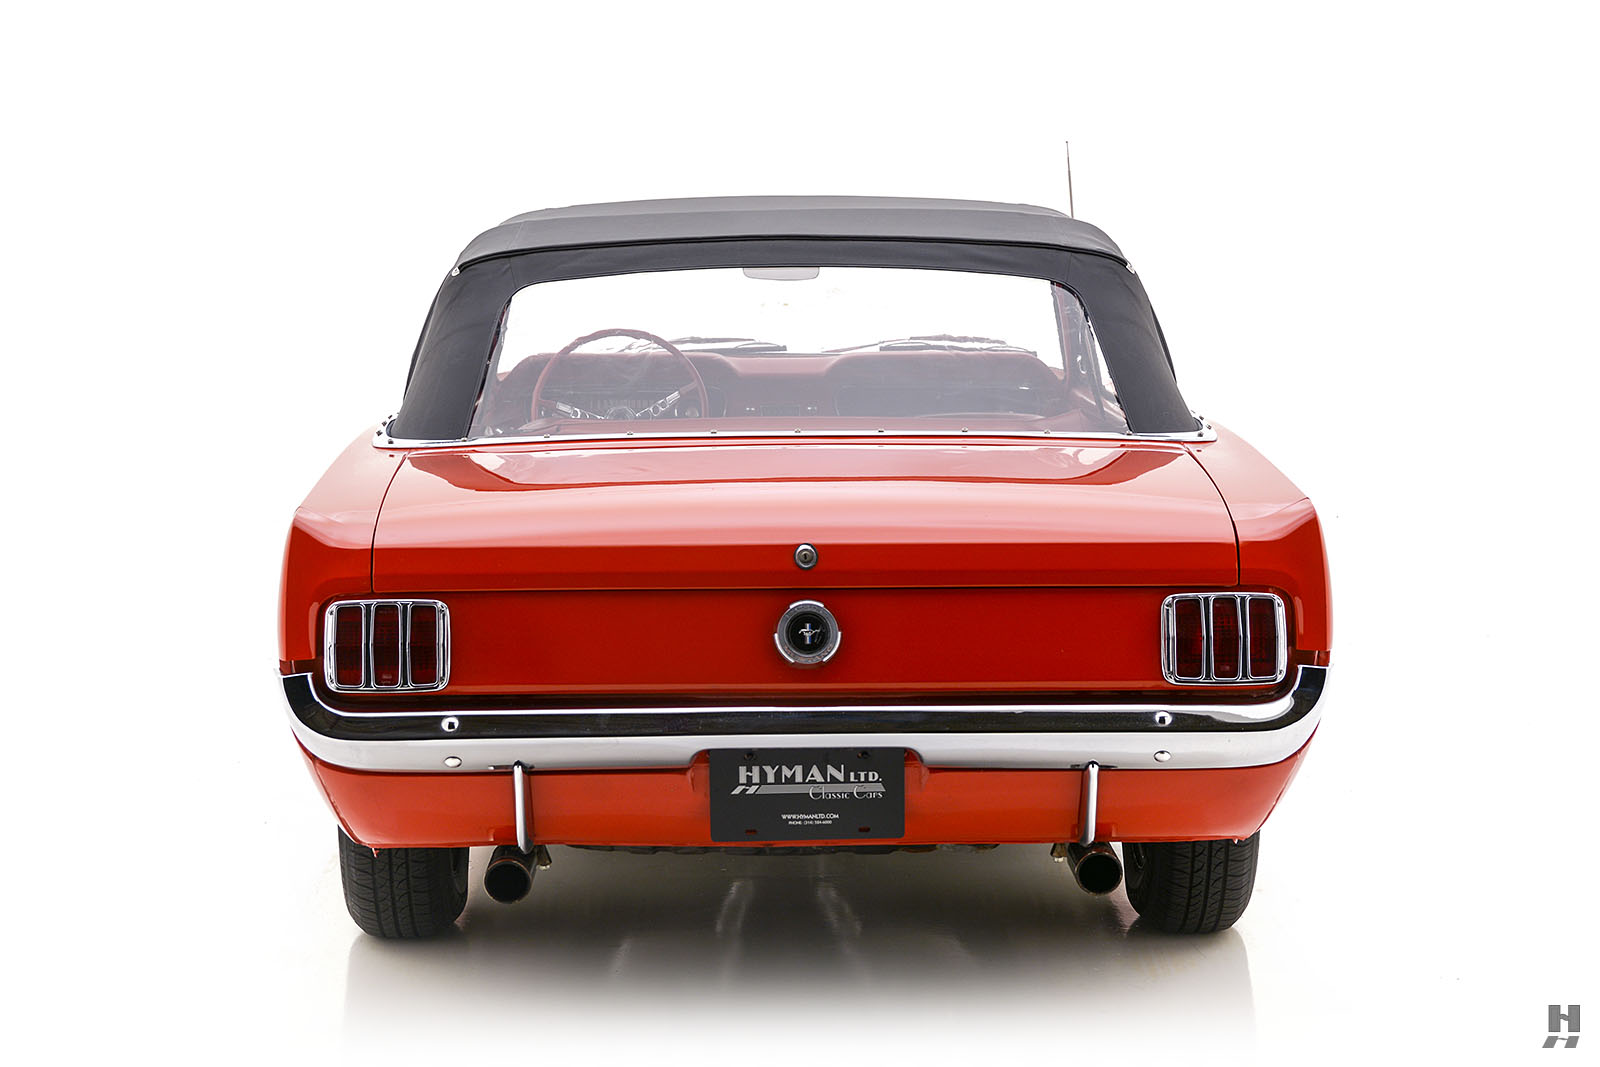 1971 Ford Mustang Grande